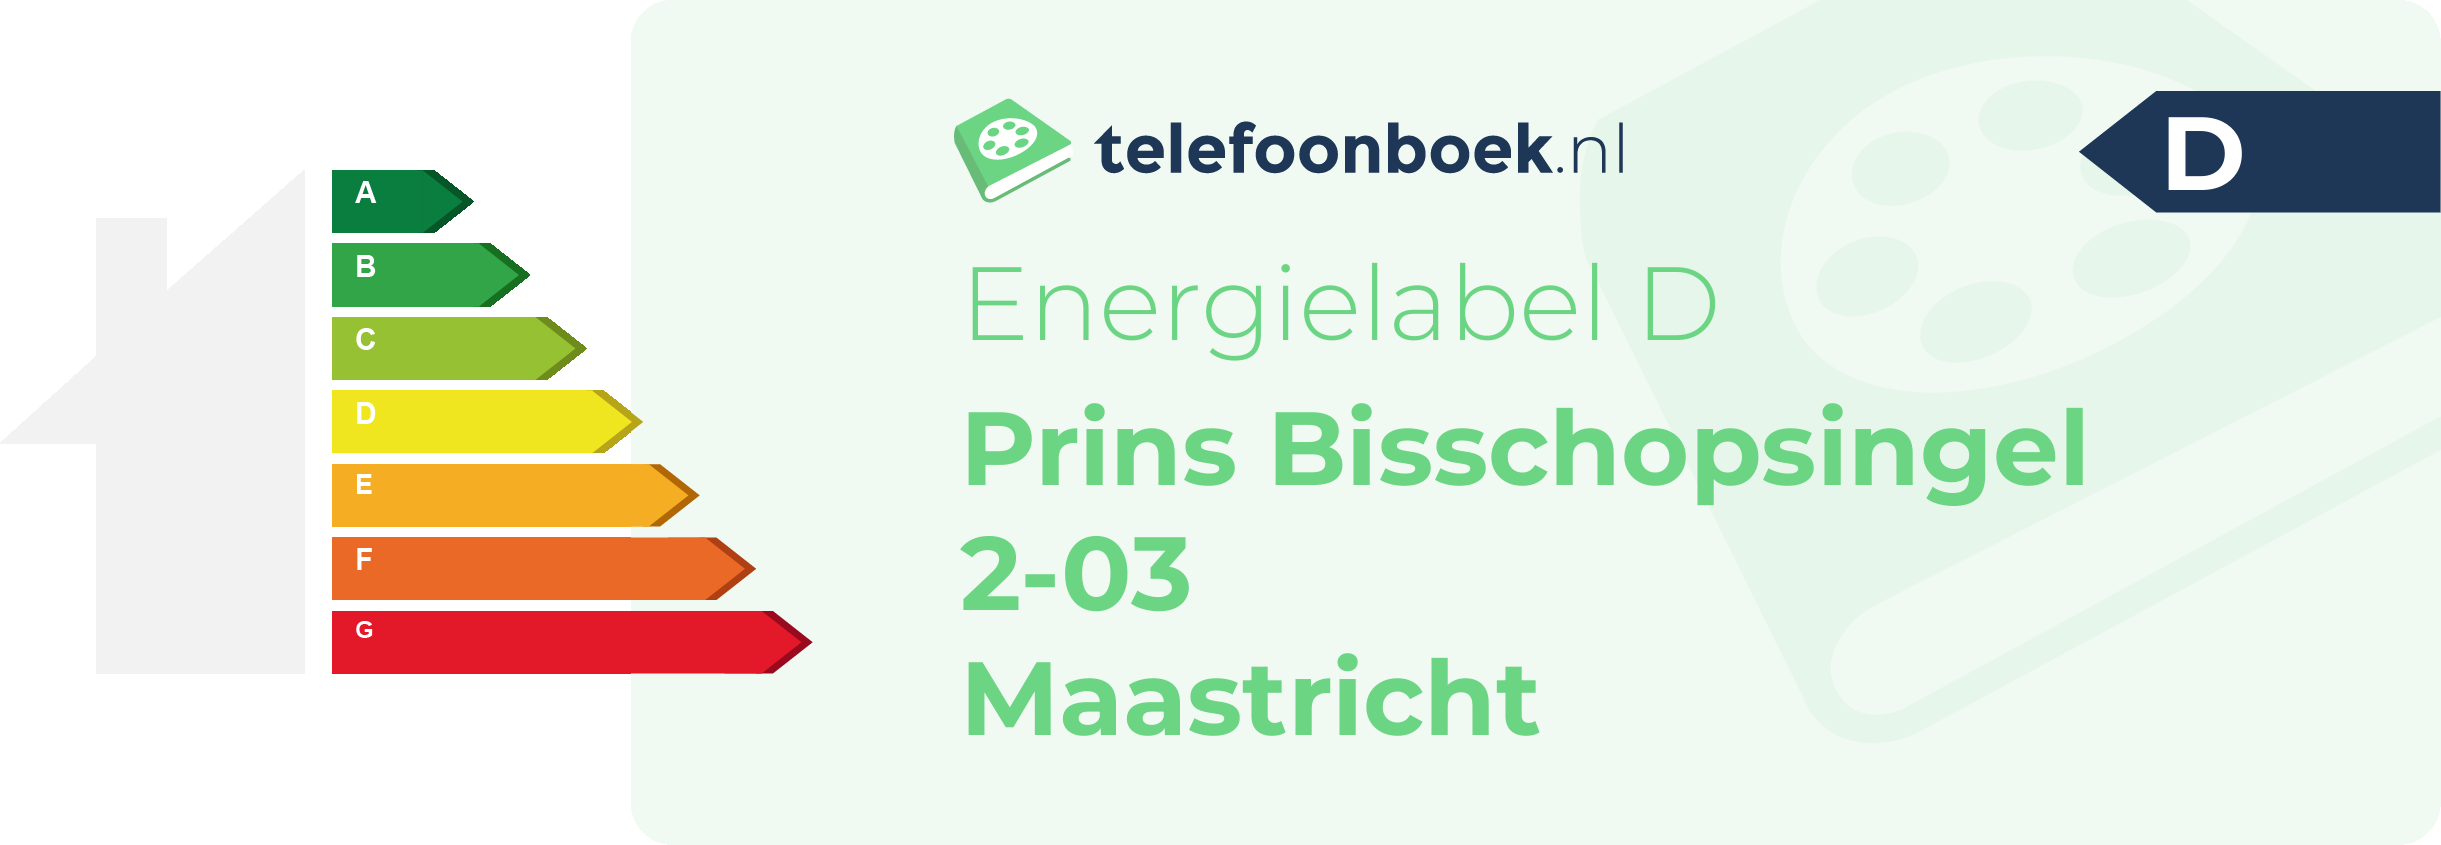 Energielabel Prins Bisschopsingel 2-03 Maastricht